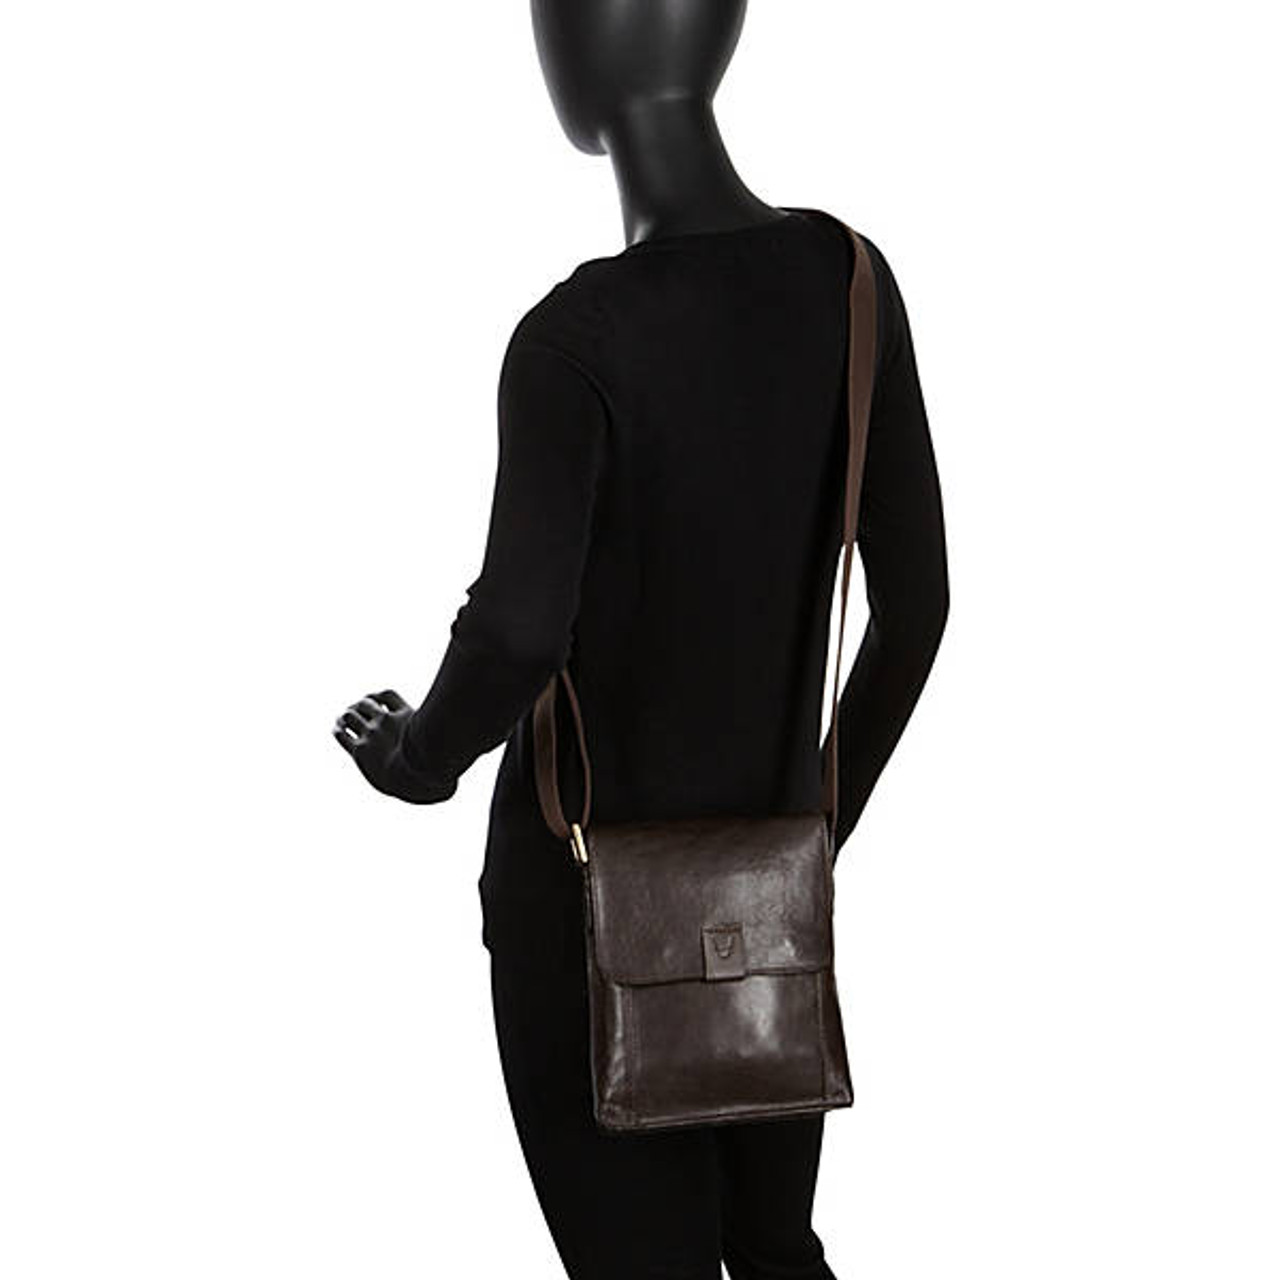 Hidesign Aiden Genuine Leather Medium Crossbody Men/Women Shoulder  Messenger Bag/Travel Bag / 10.5 iPad Bag